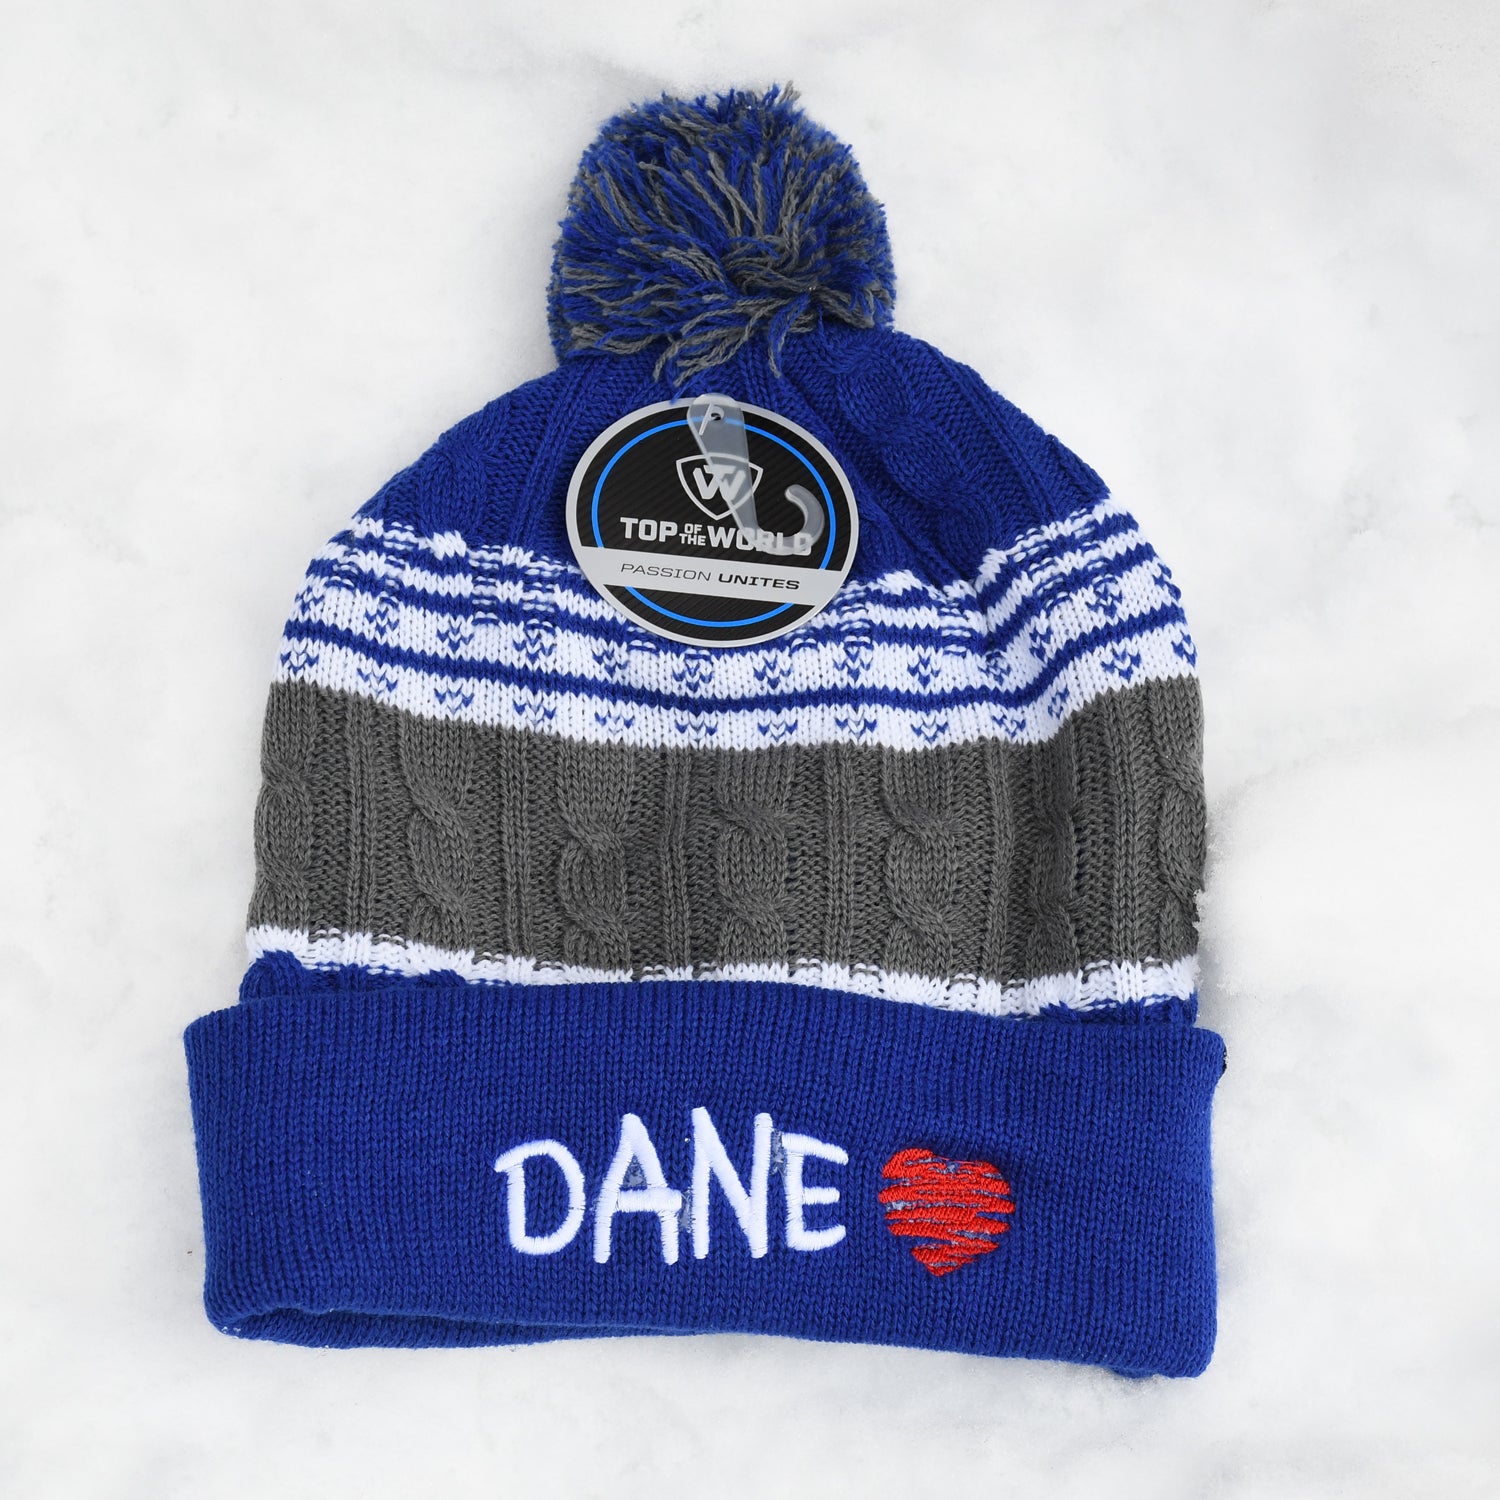 DANE knit hat, blue